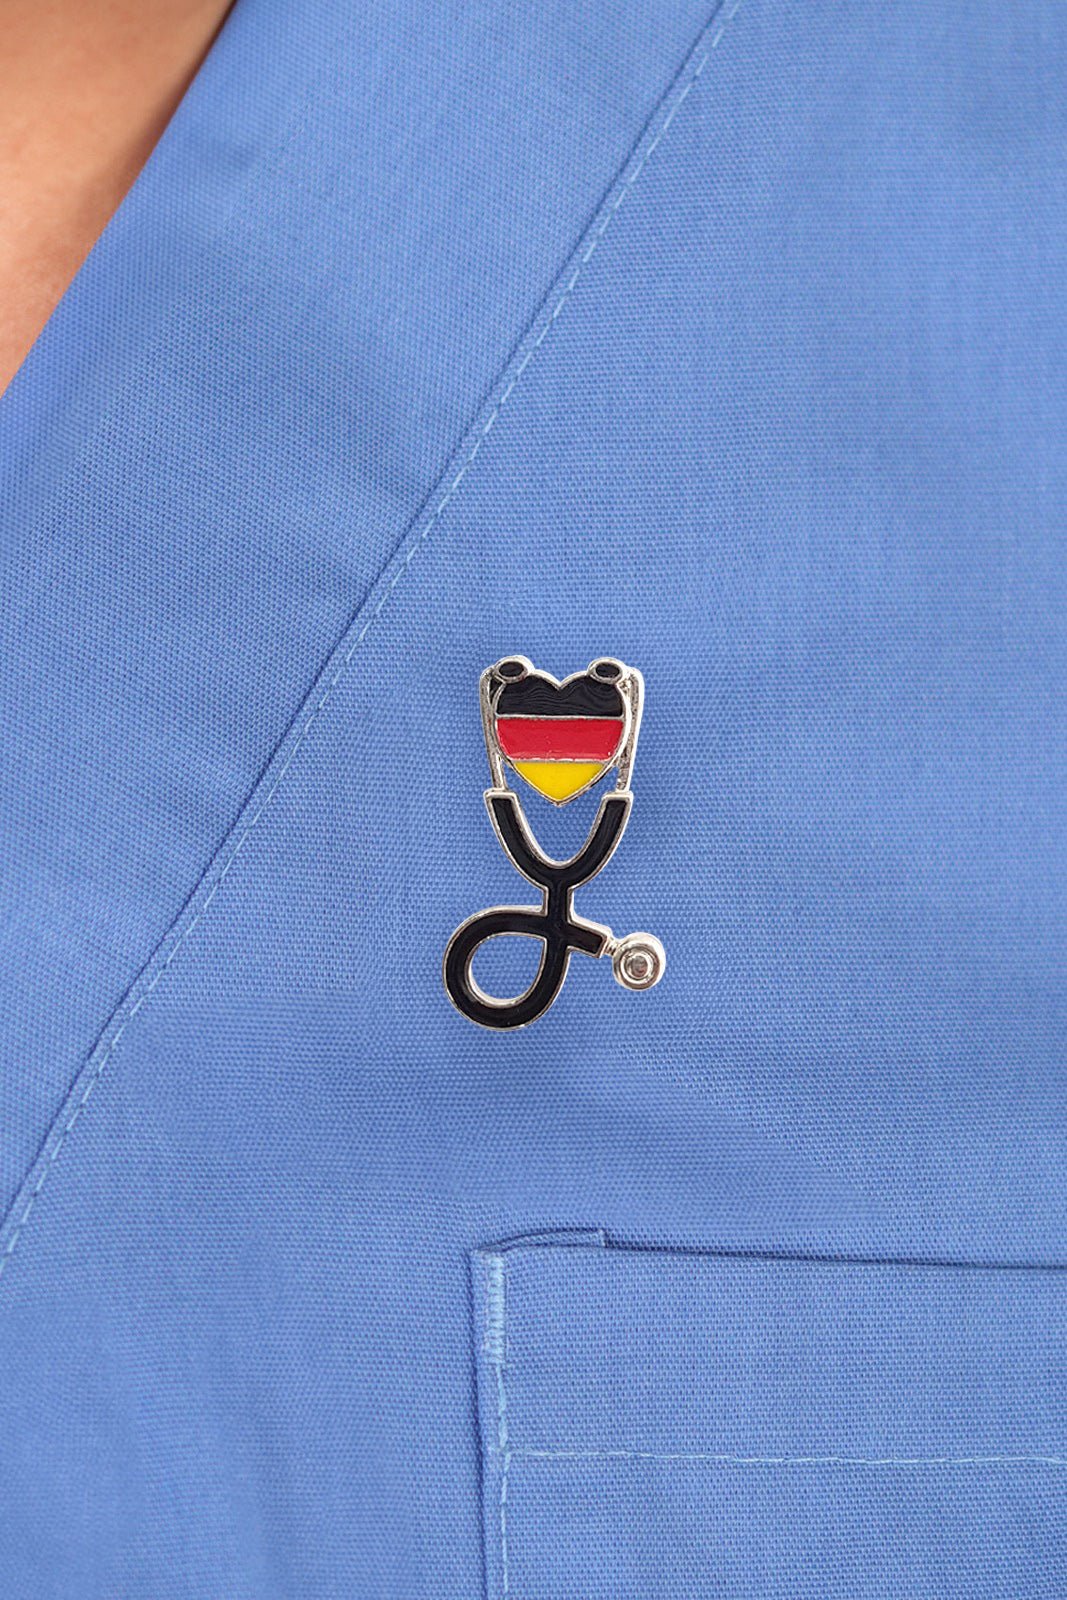 Germany Stethoscope Flag Pin